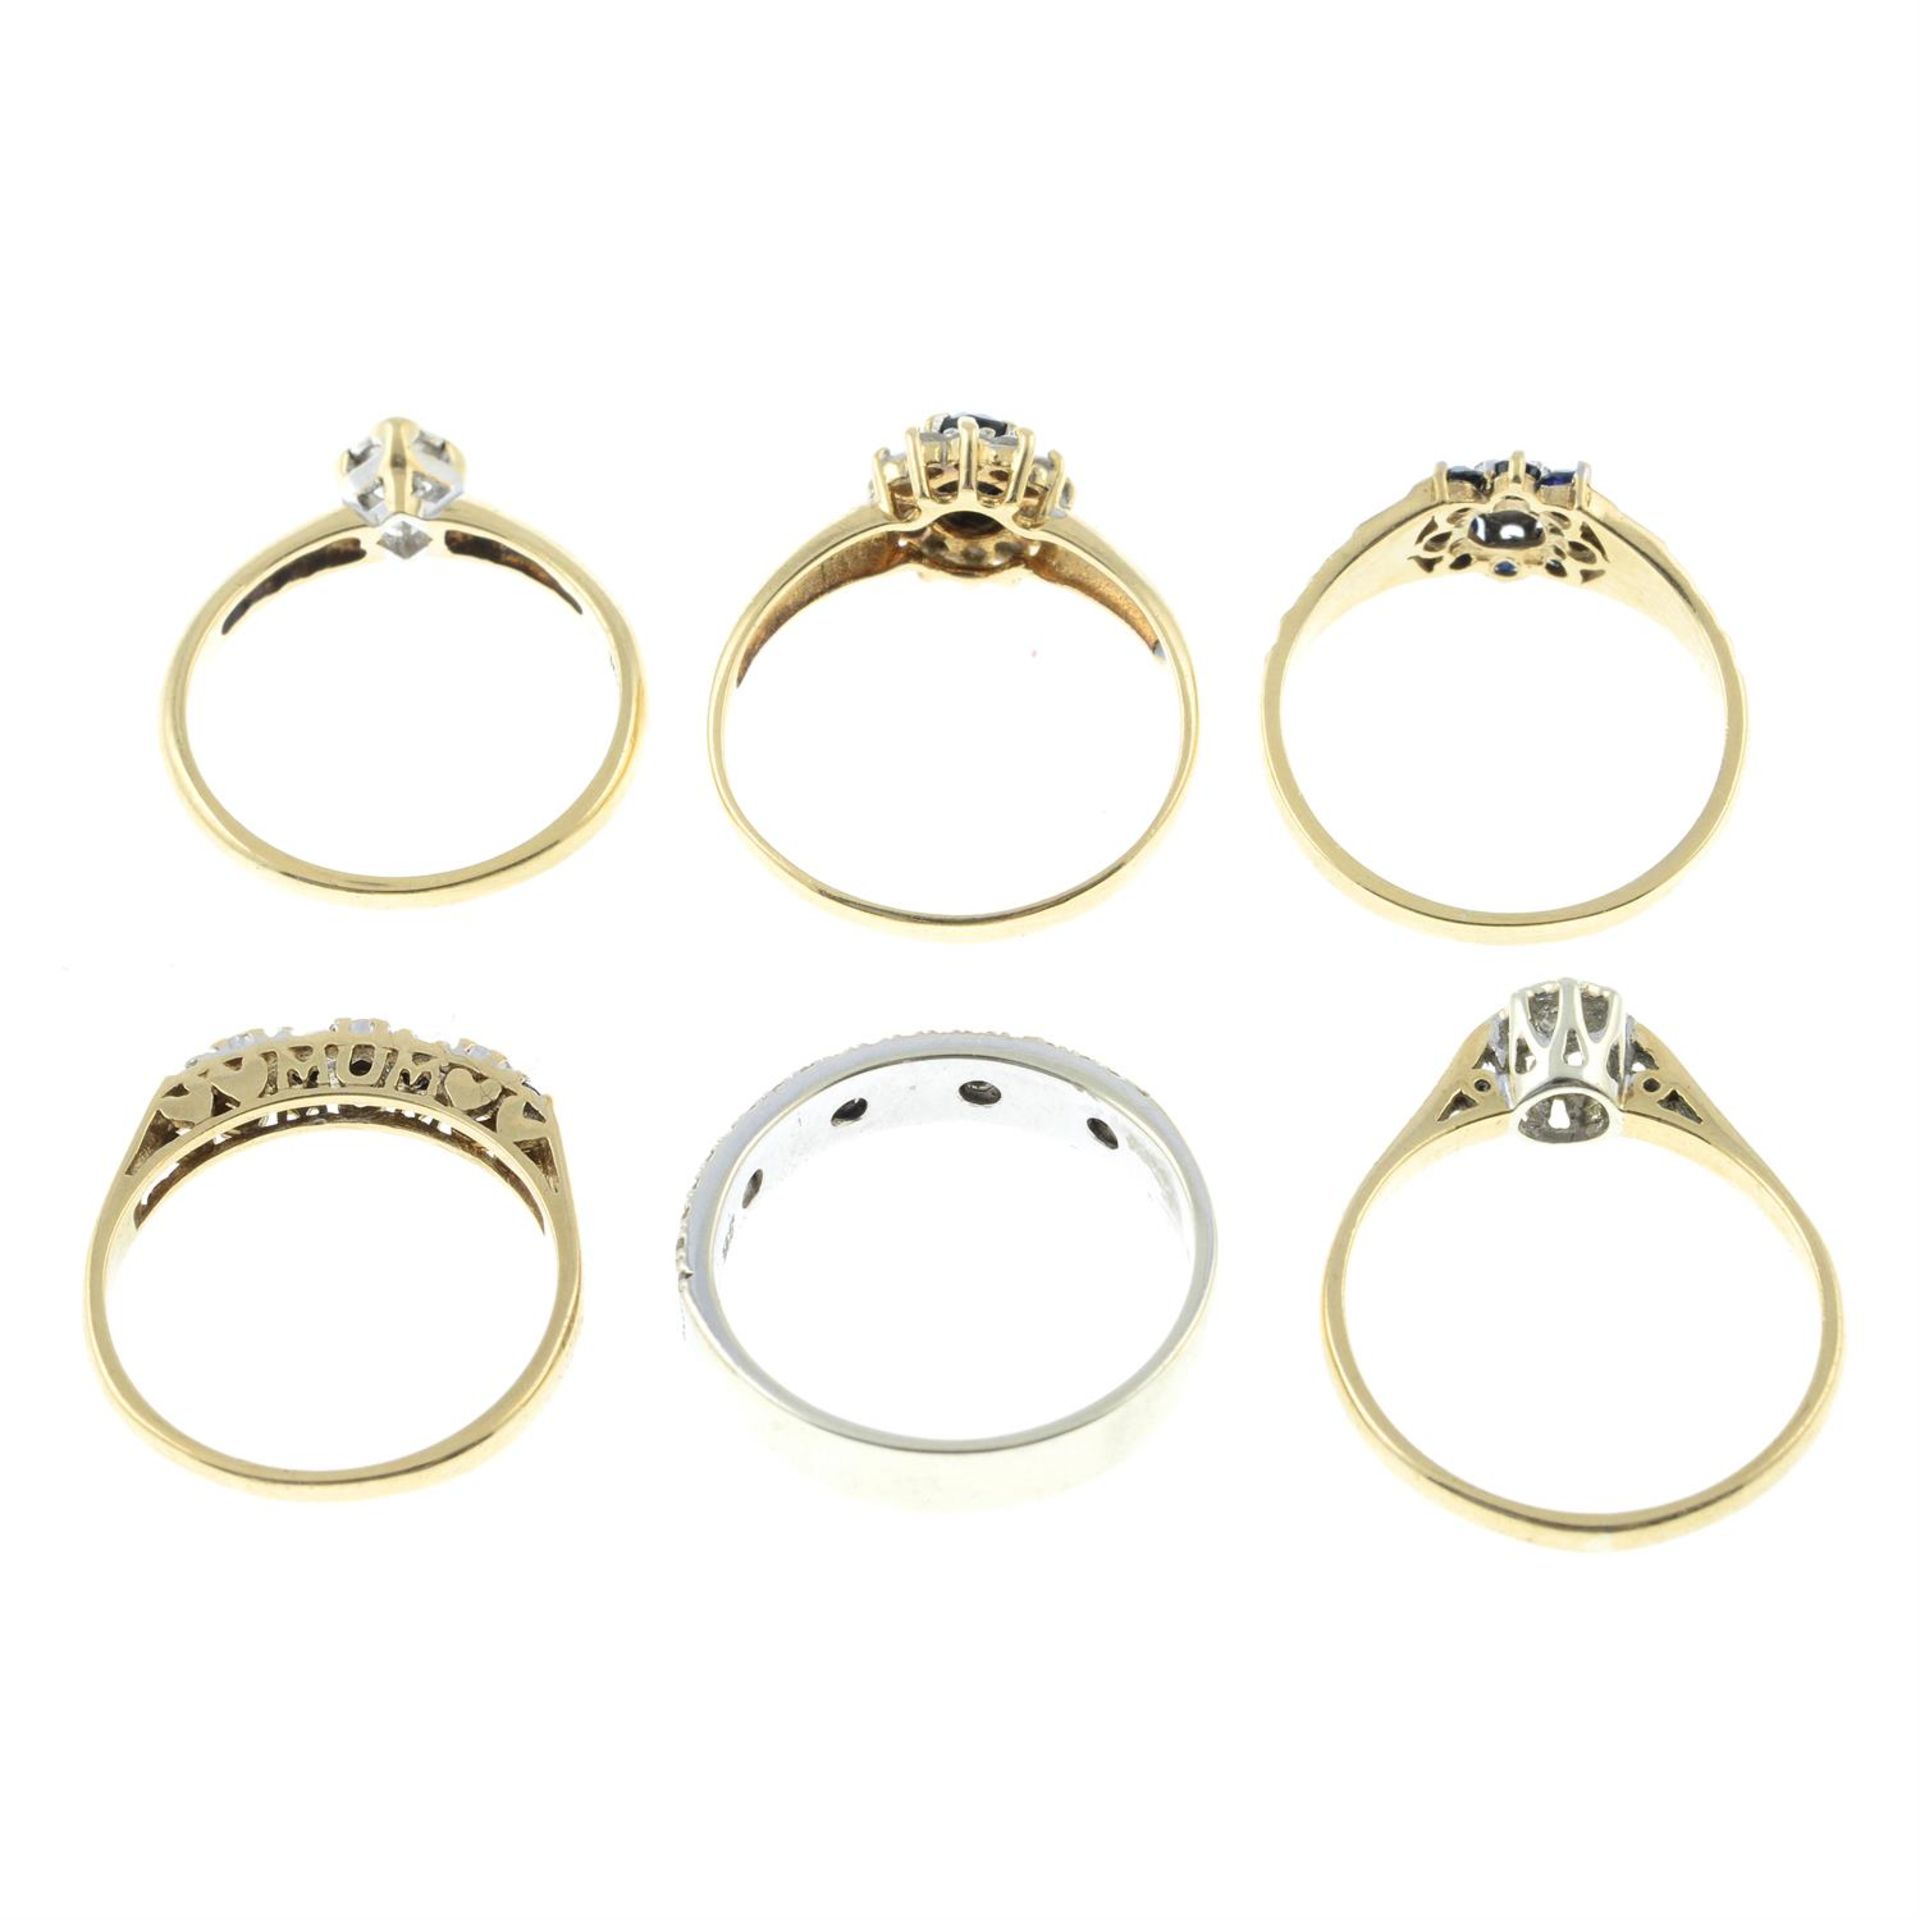 Six 9ct gold gem-set rings. - Image 2 of 2